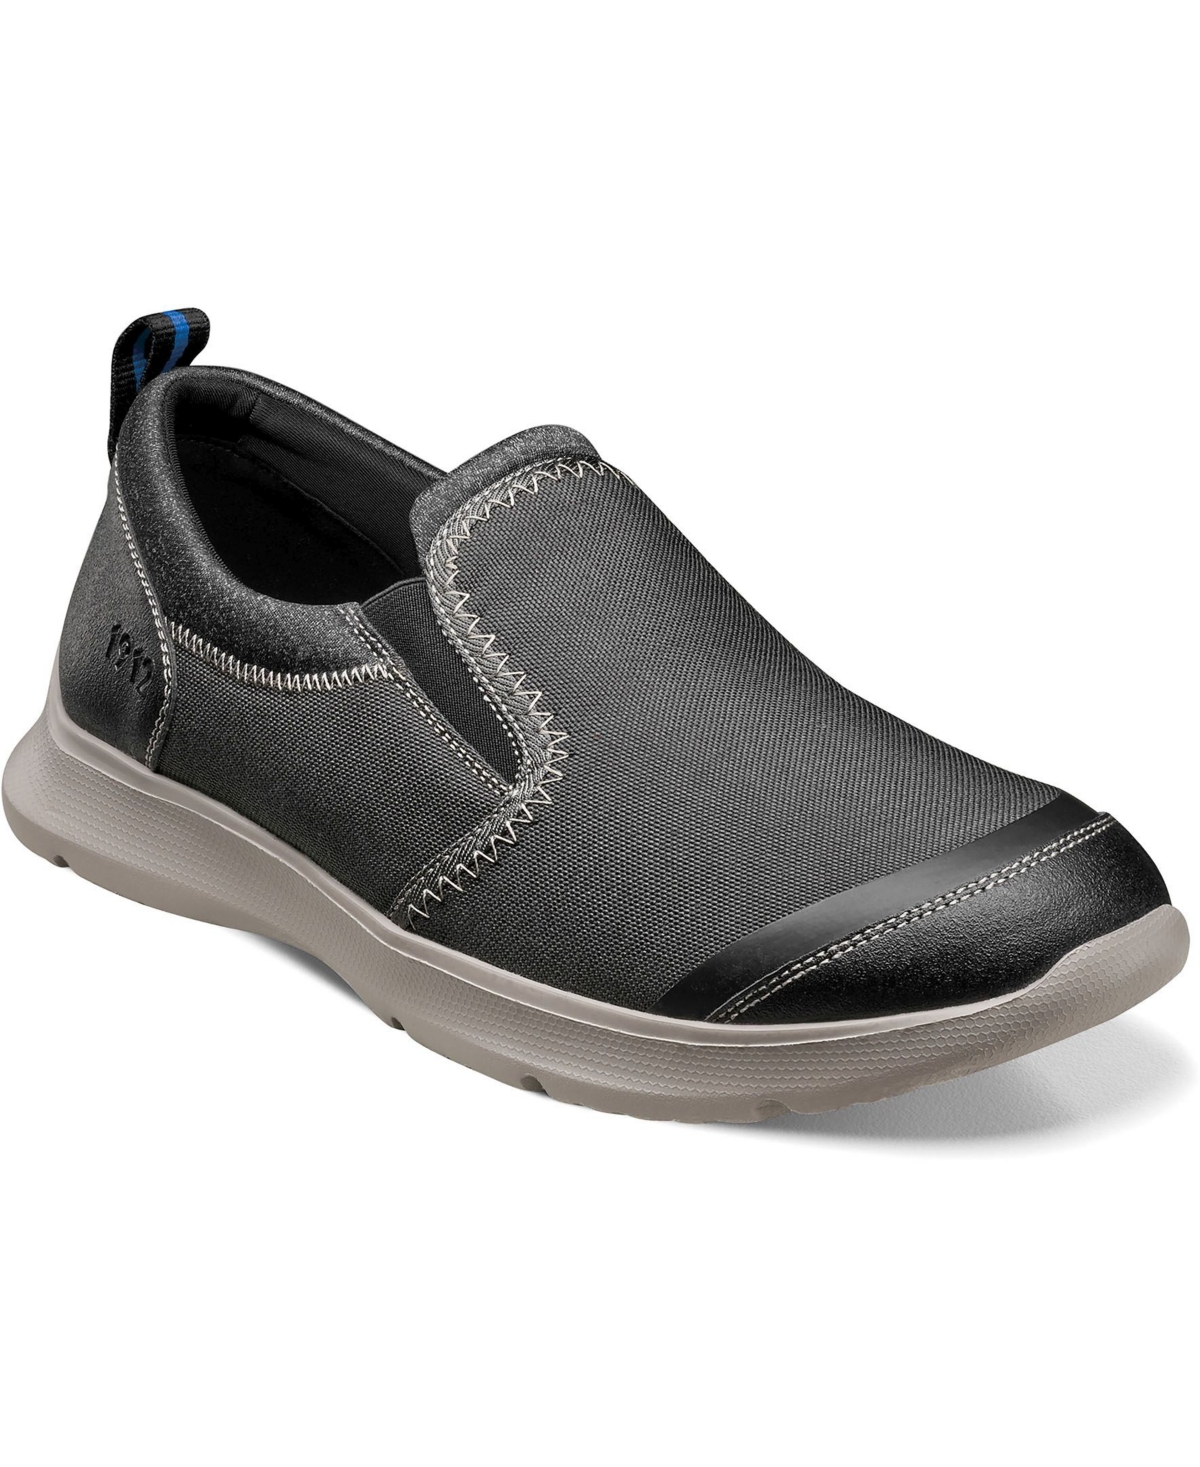 Men's Bushwacker Slip-On Loafers - Dark Gray Multi